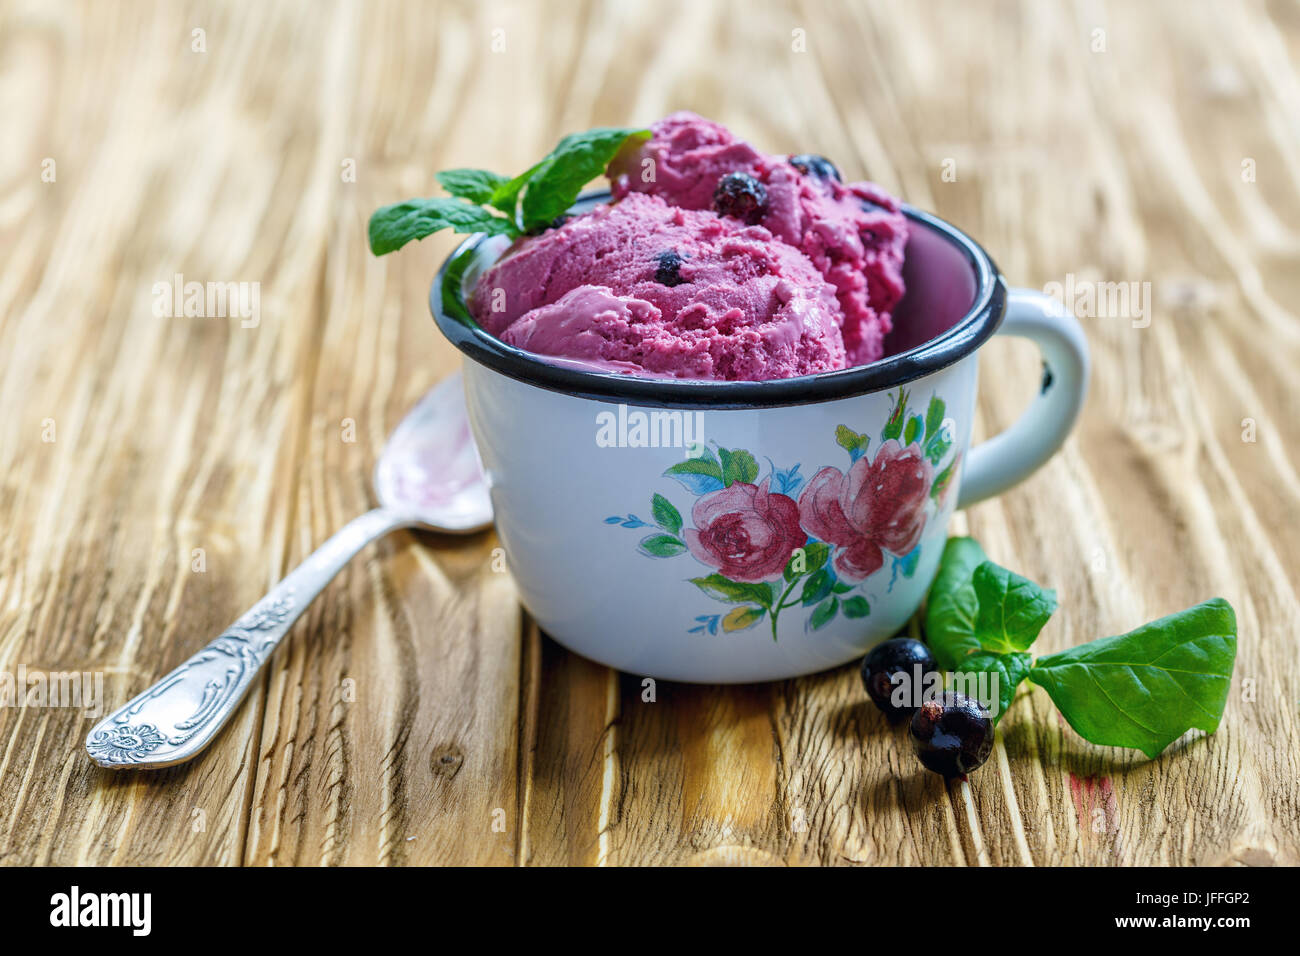 Berry ice cream and mint in enamel mug. Stock Photo